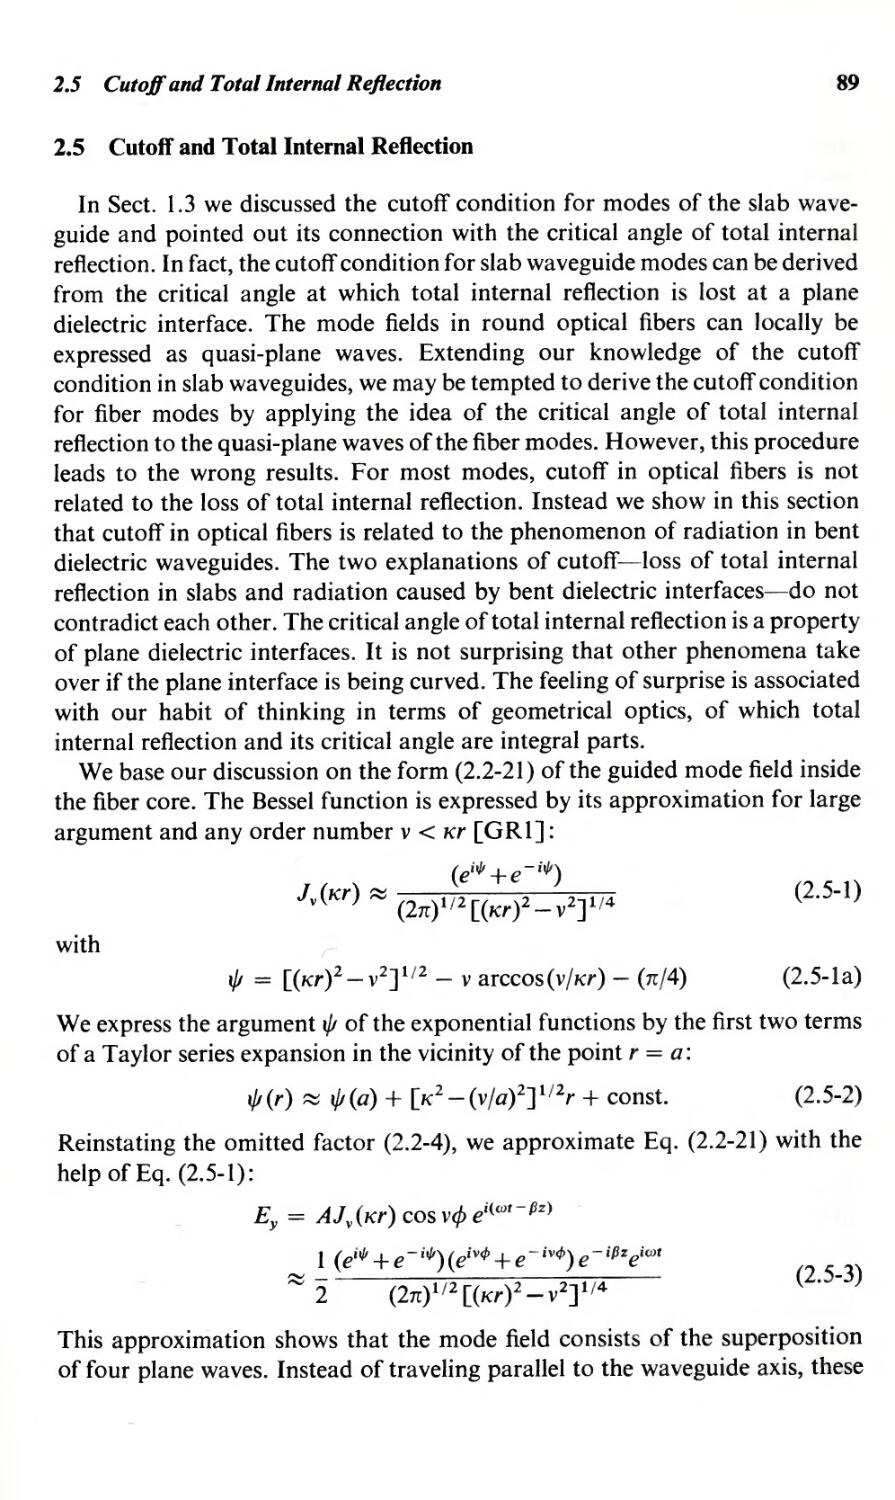 2.5 Cutoff and Total Internal Reflection 89
--- approximation for large arguments, 89
--- approximation for large order, 89
89
89
L
Q